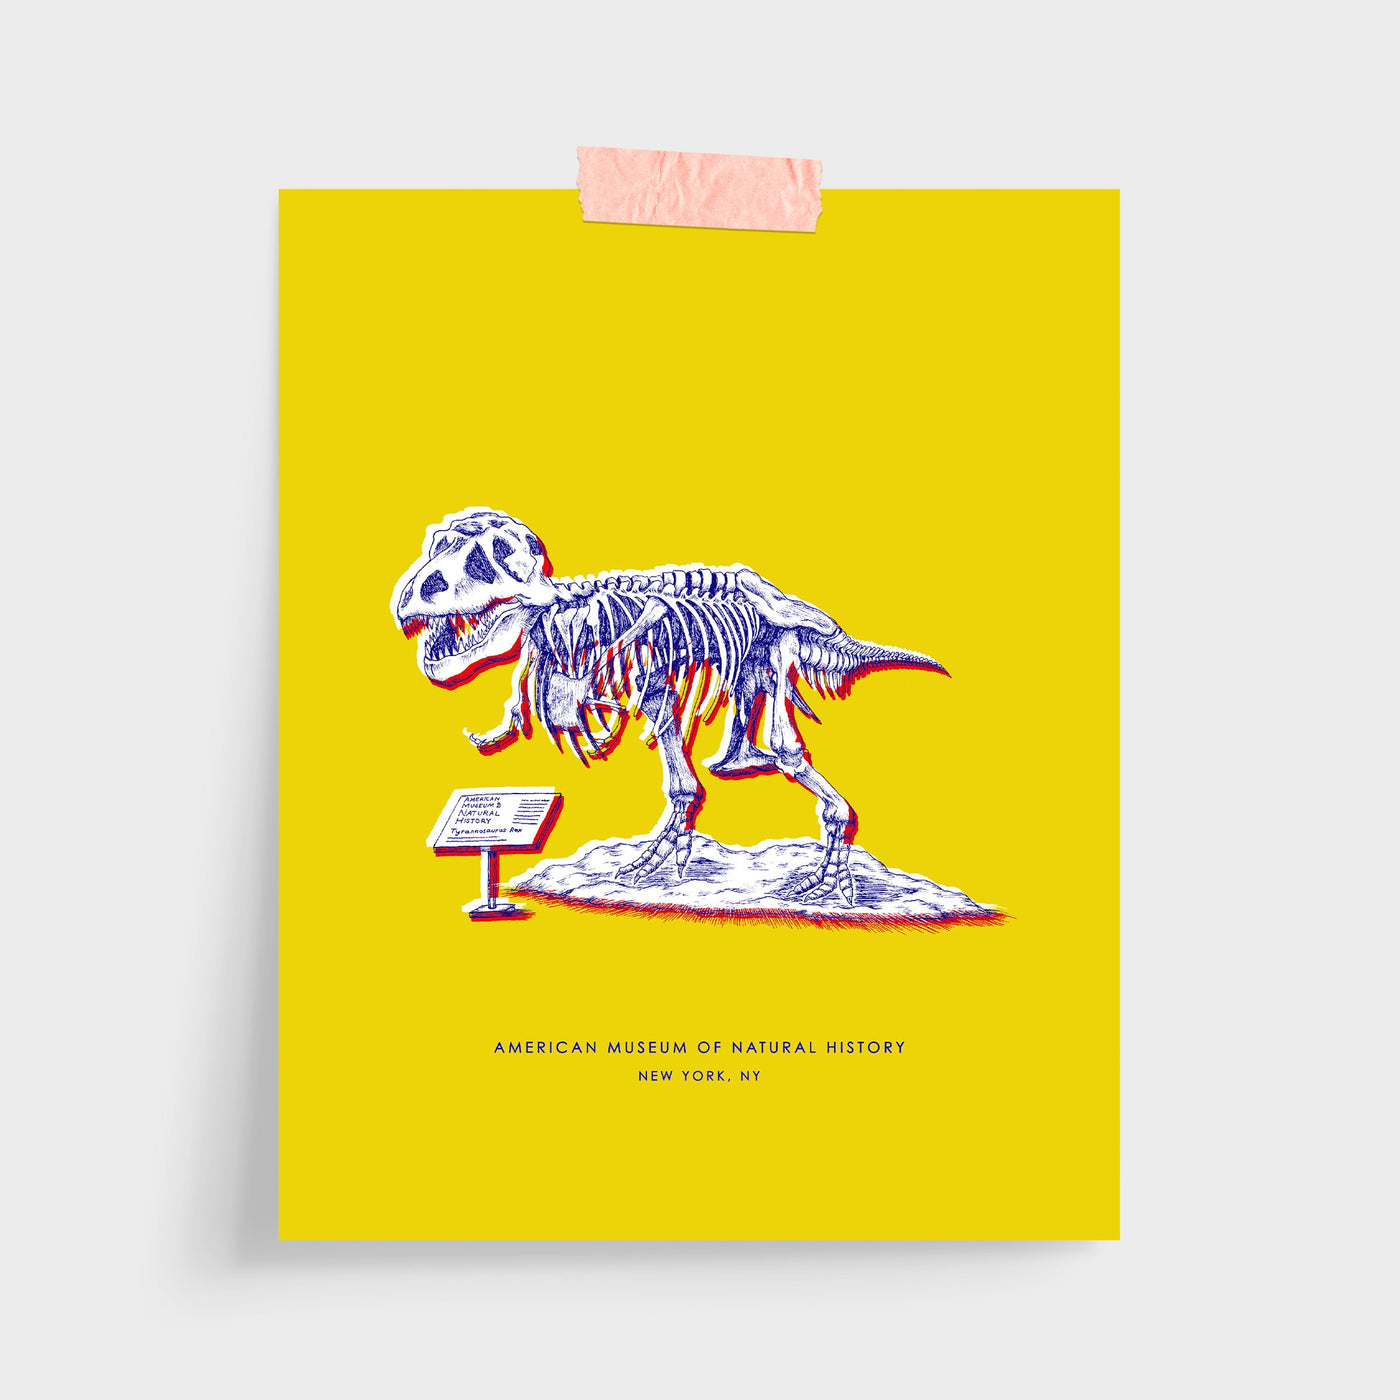 Gallery Prints Yellow Print / 5x7 / Unframed New York Dinosaur Print Katie Kime